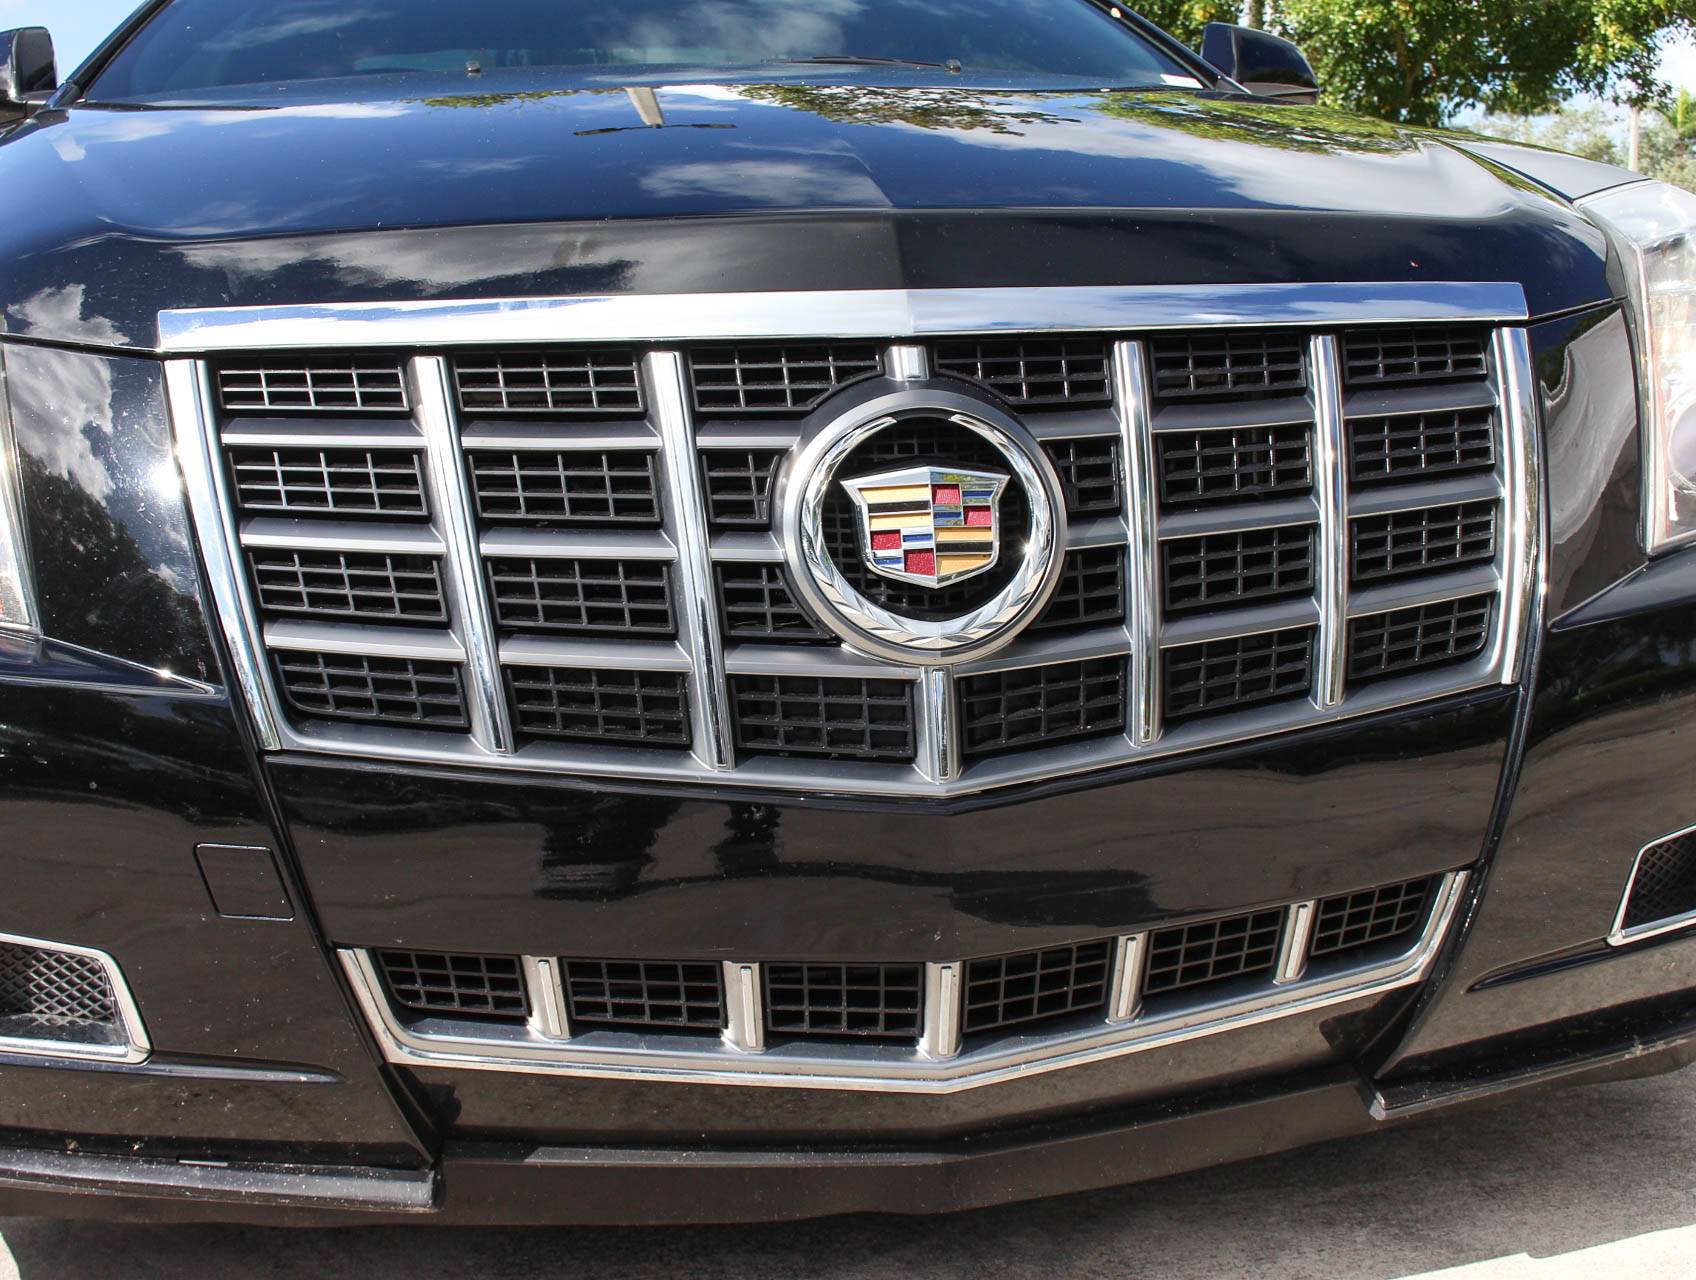 Florida Fine Cars - Used CADILLAC CTS 2012 MARGATE PERFORMANCE